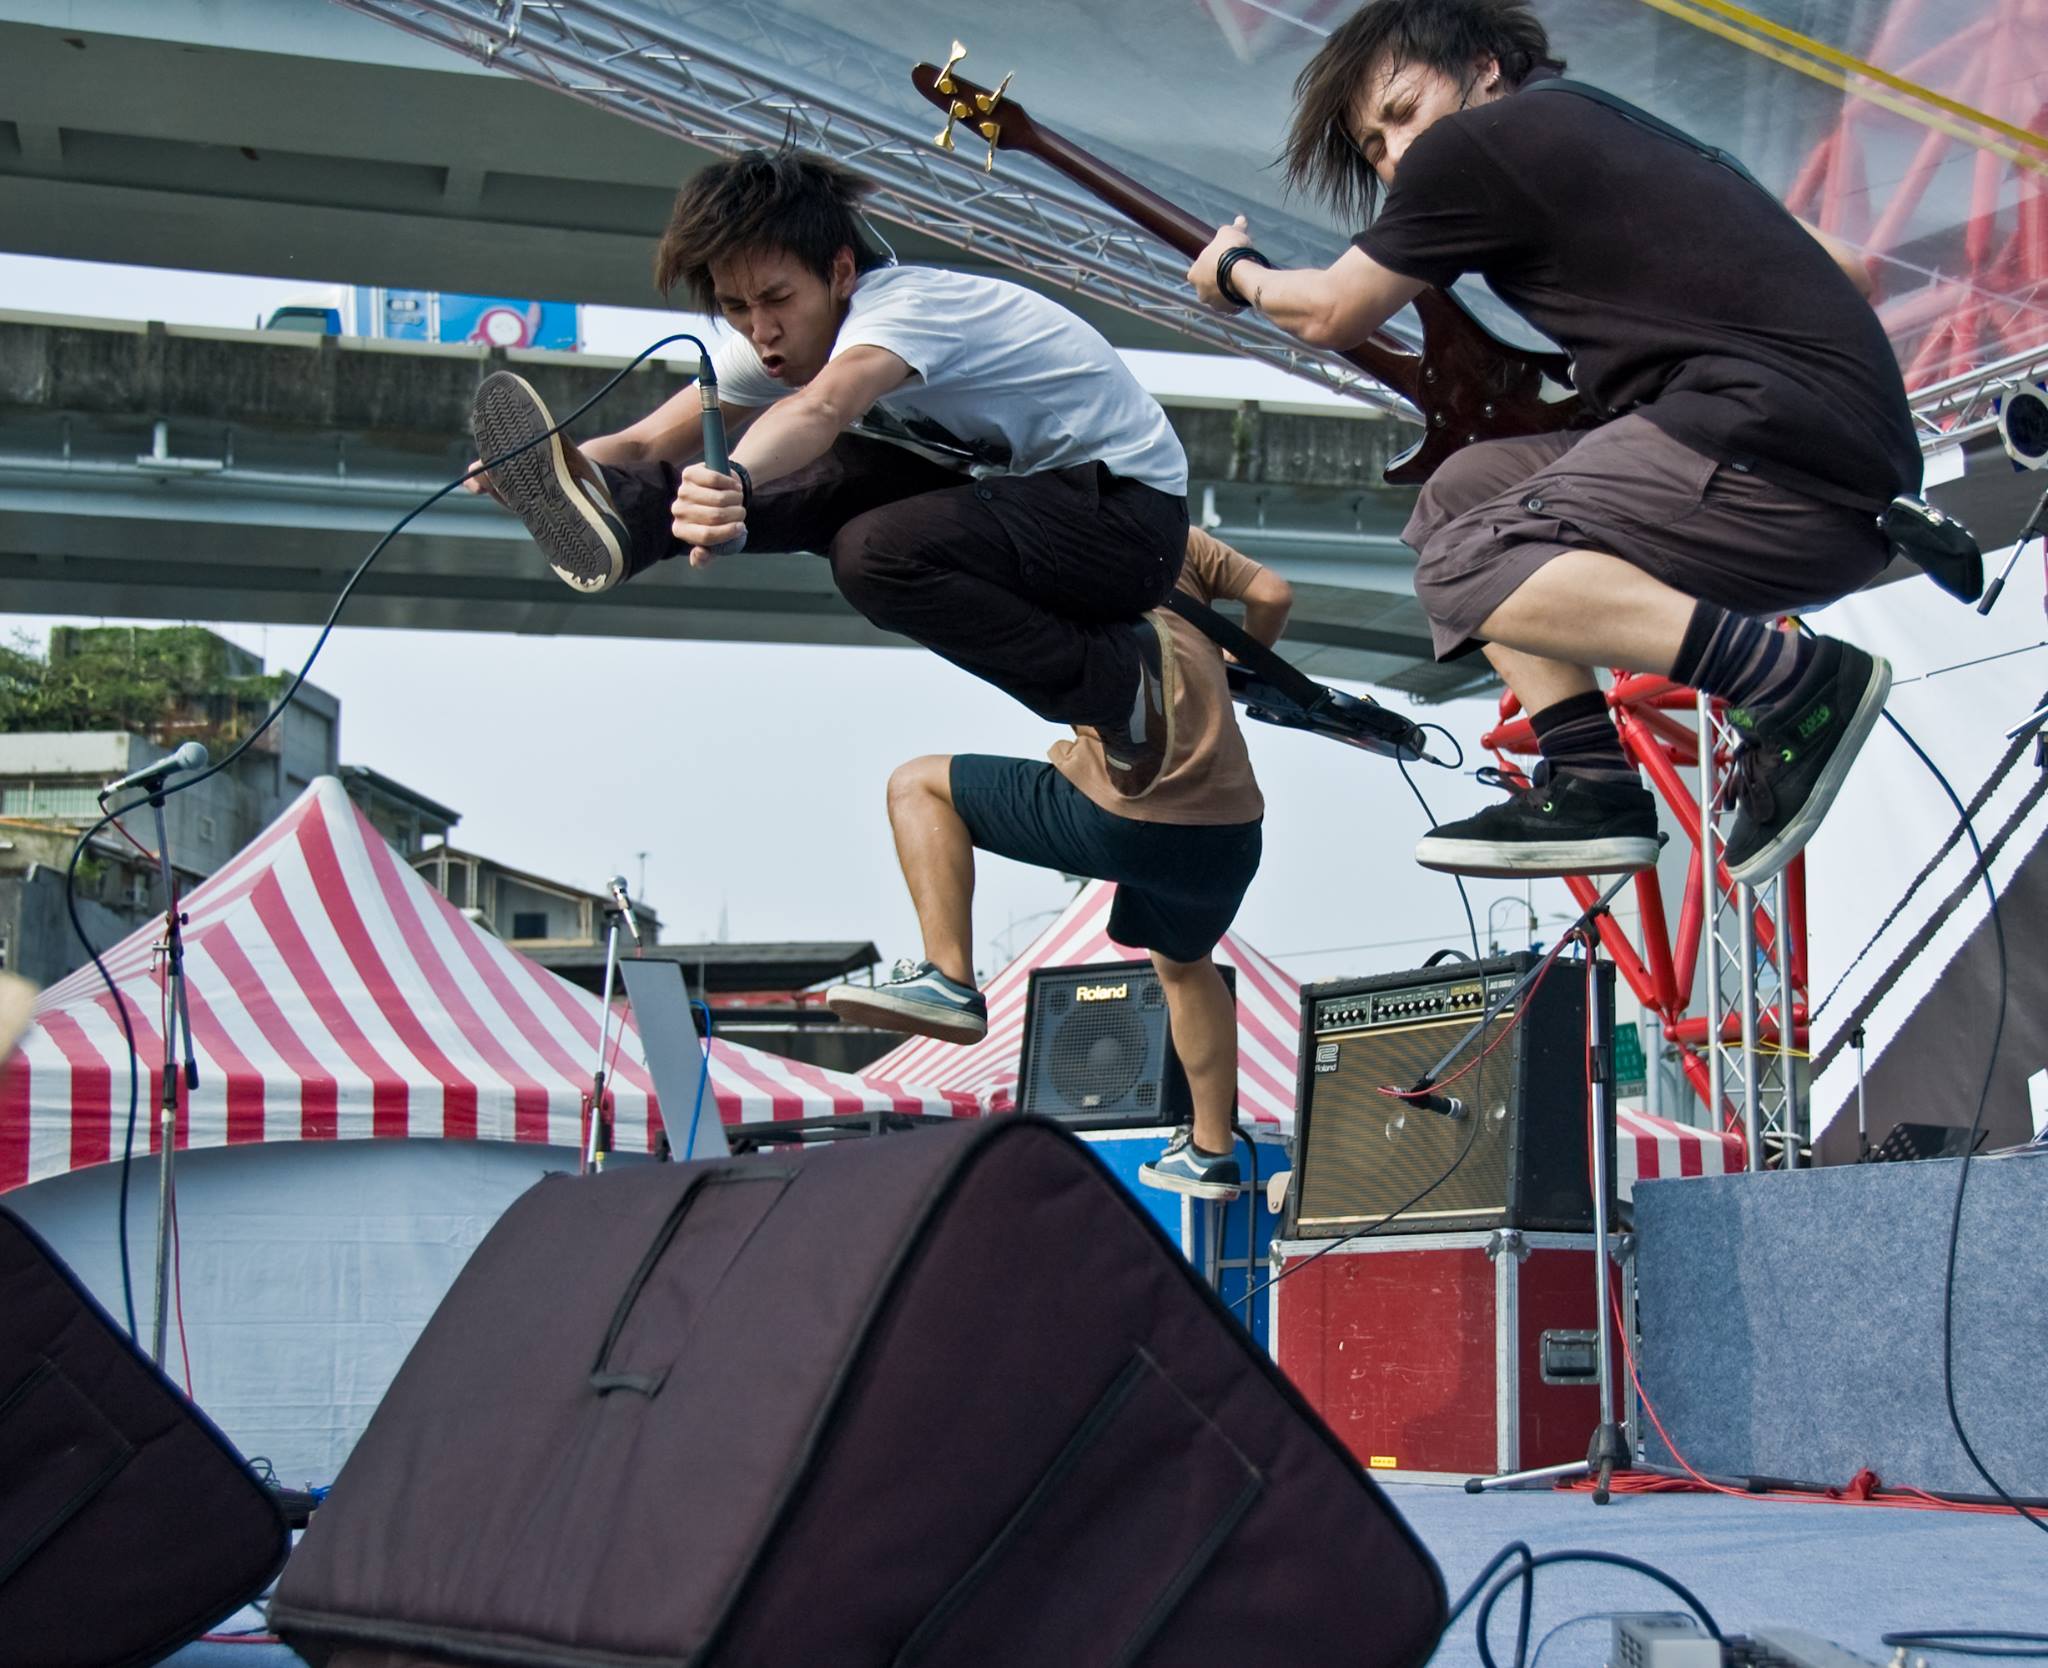 fire-ex-taiwan-punk-jump-festival.jpg